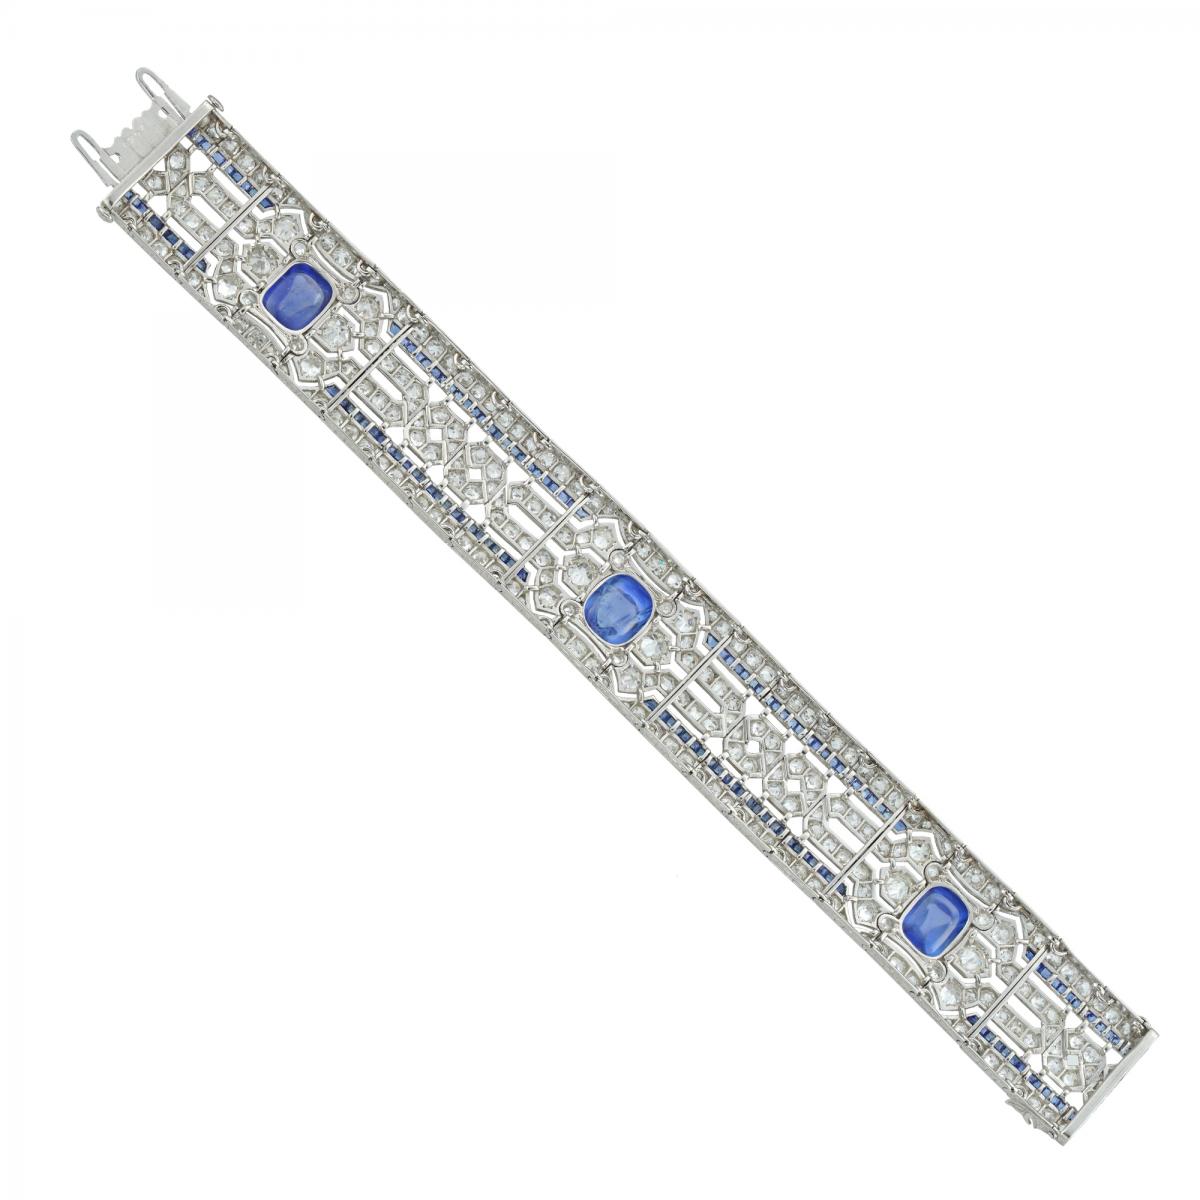 An Important Art Deco Sapphire and Diamond Bracelet, Circa 1920